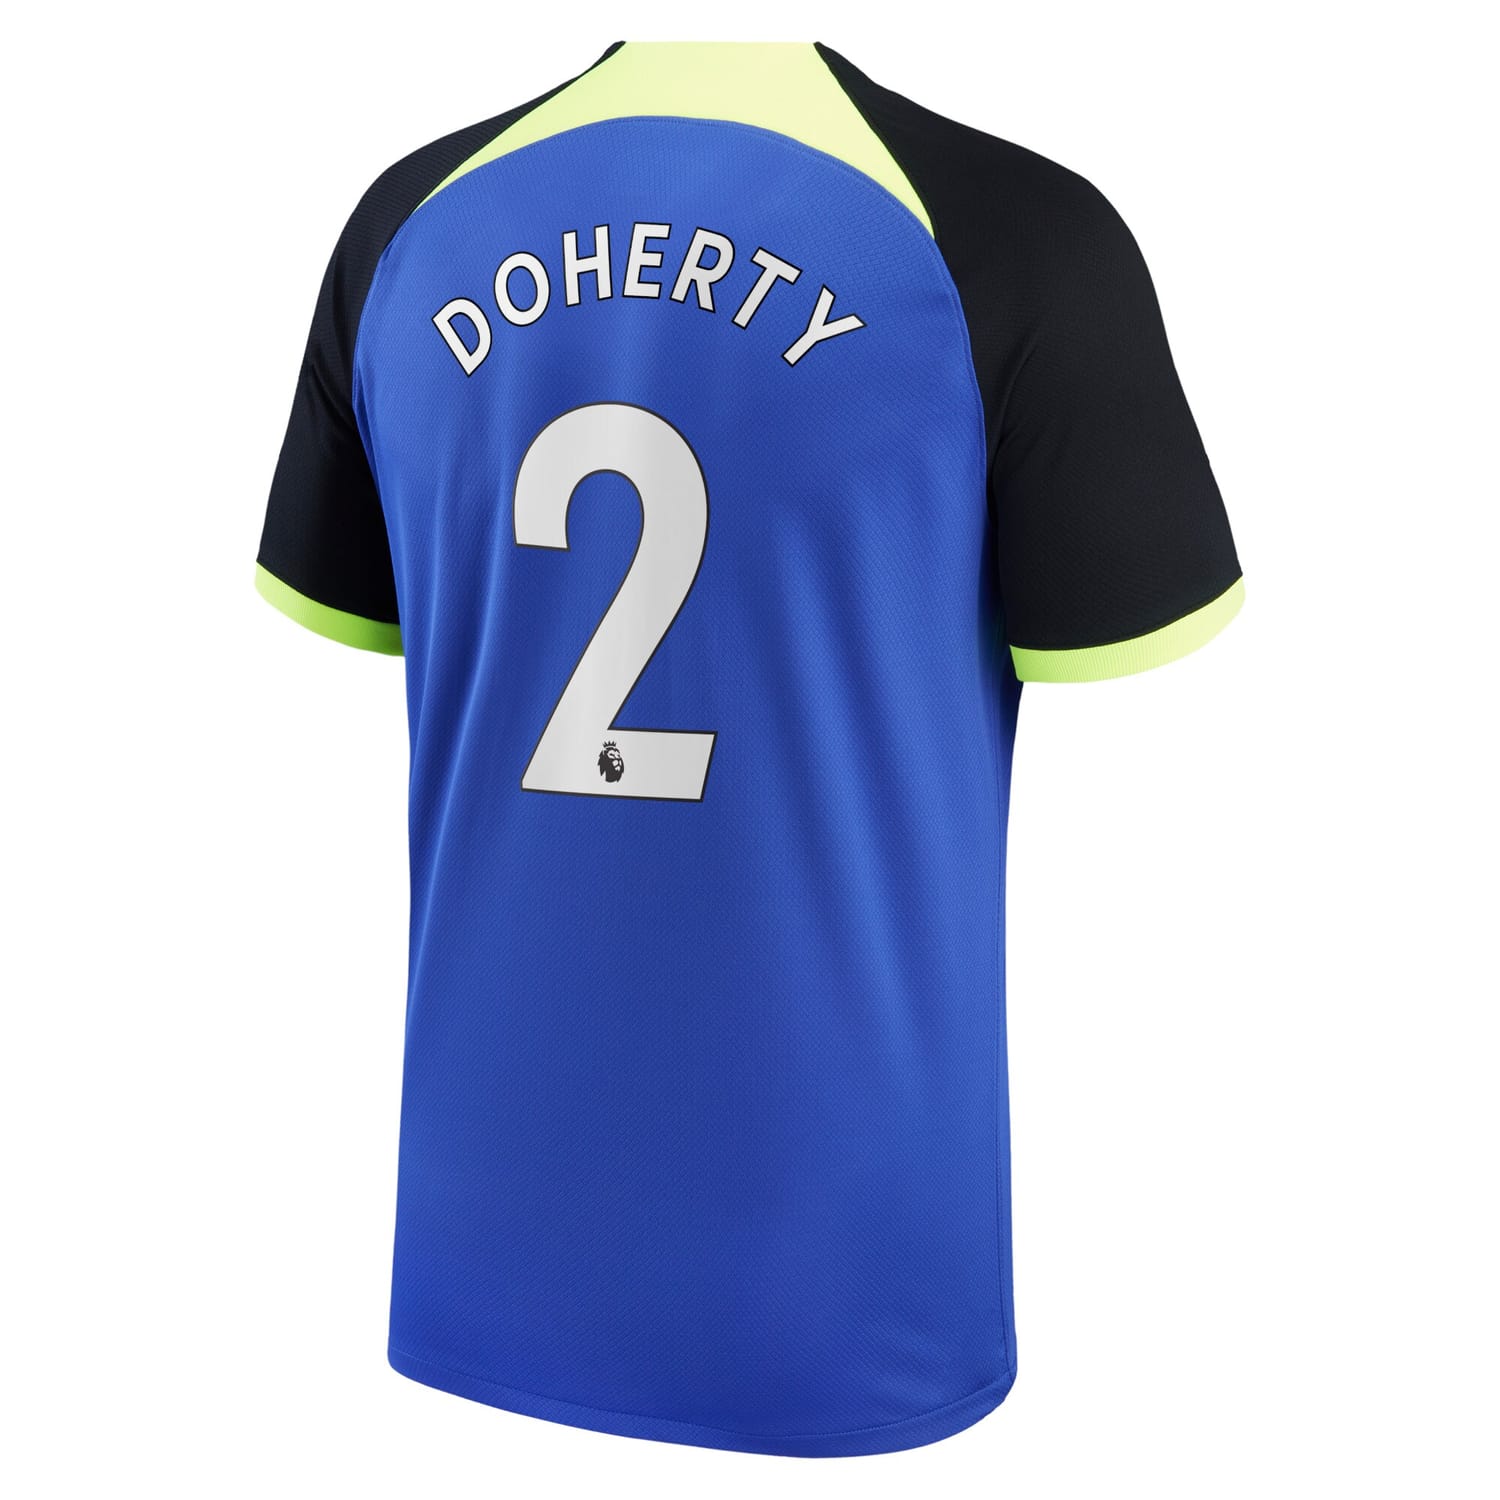 Premier League Tottenham Hotspur Away Jersey Shirt 2022-23 player Doherty 2 printing for Men